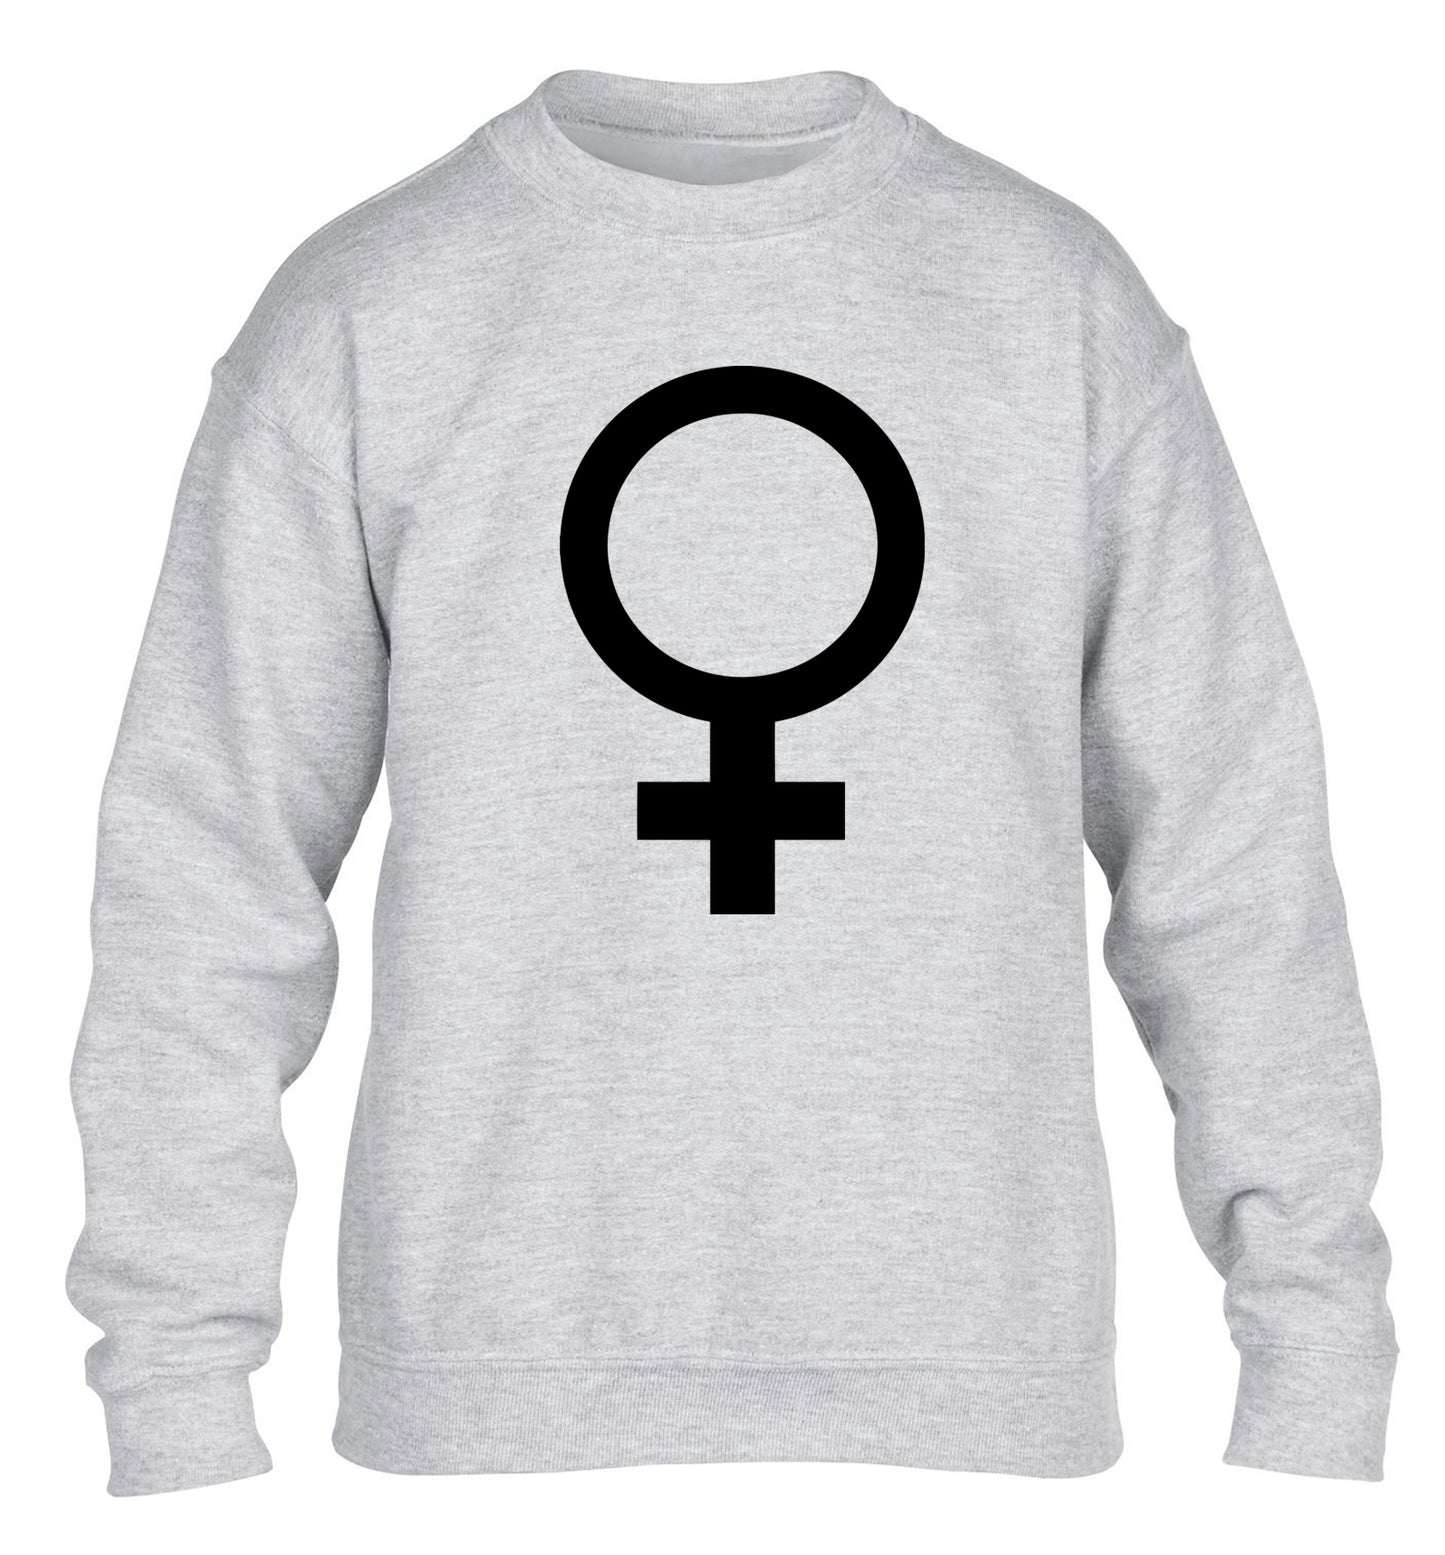 Female symbol large children's grey sweater 12-14 Years